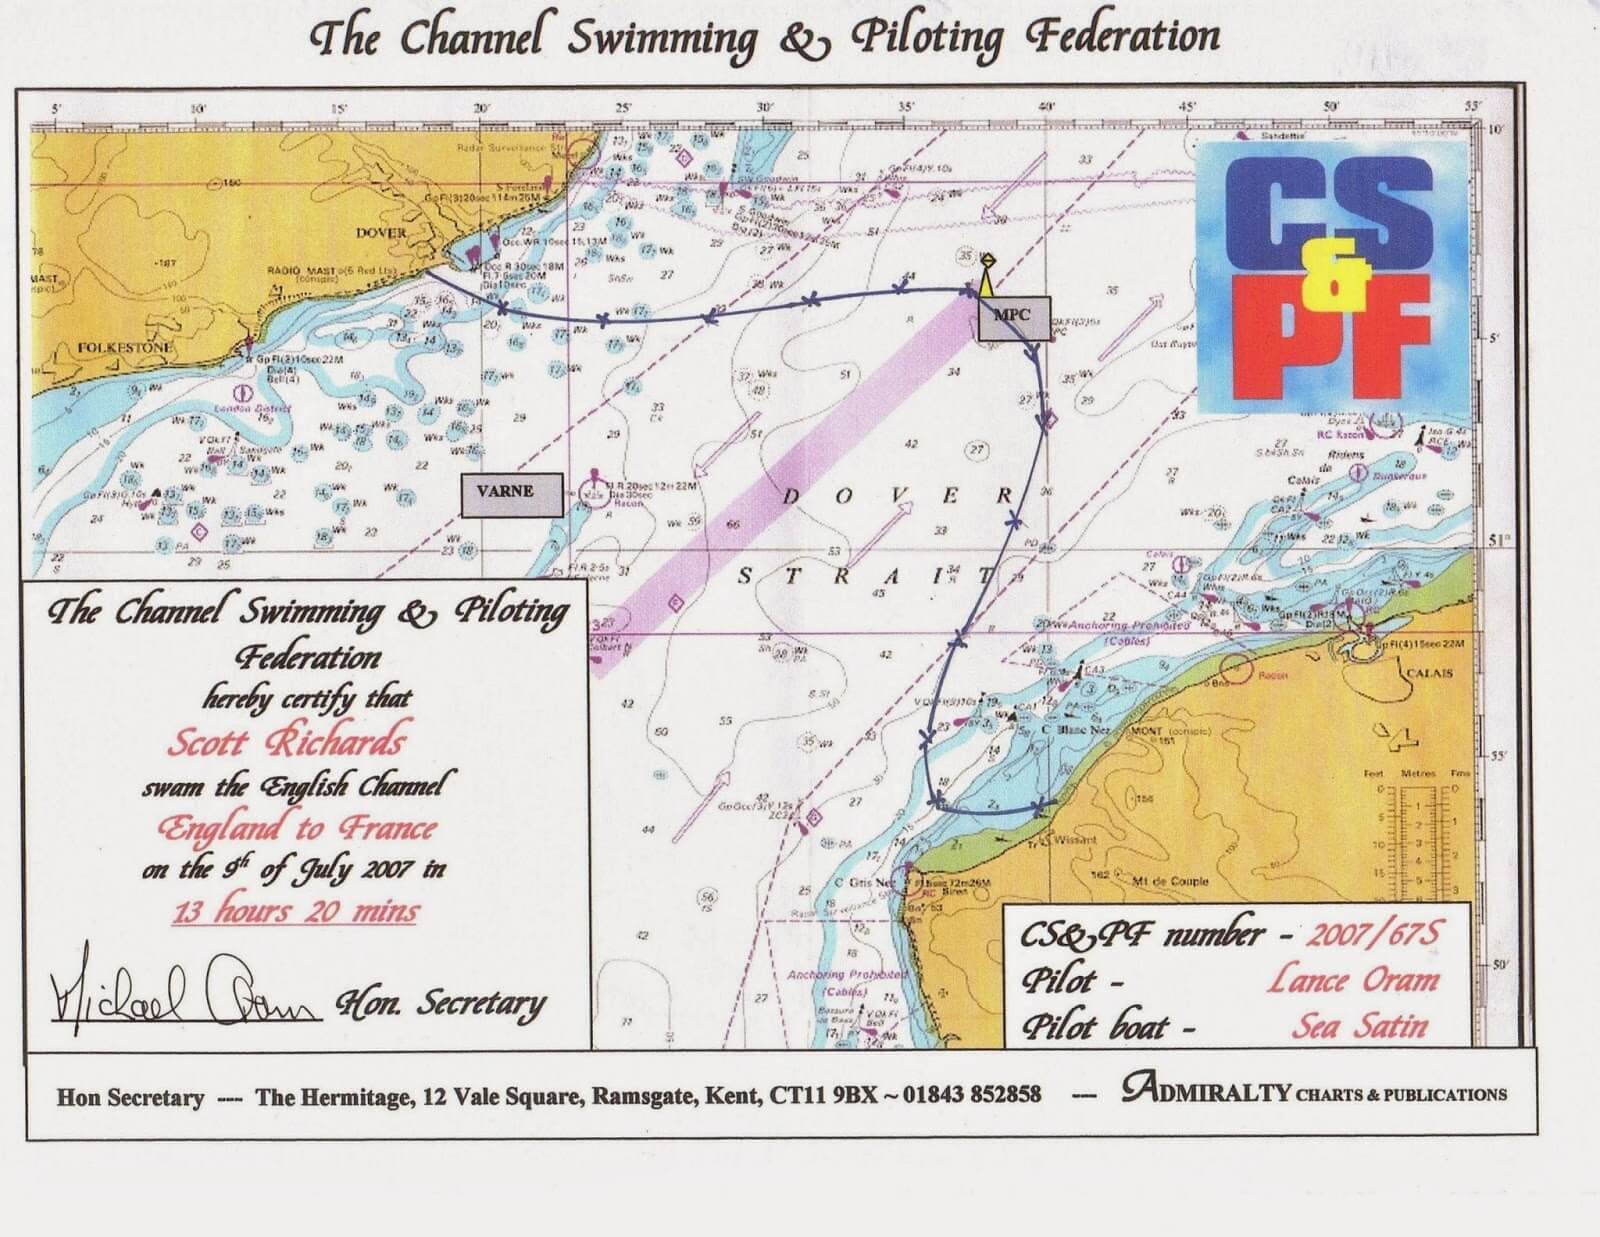 The map certifying Scott Richards' English Channel swim